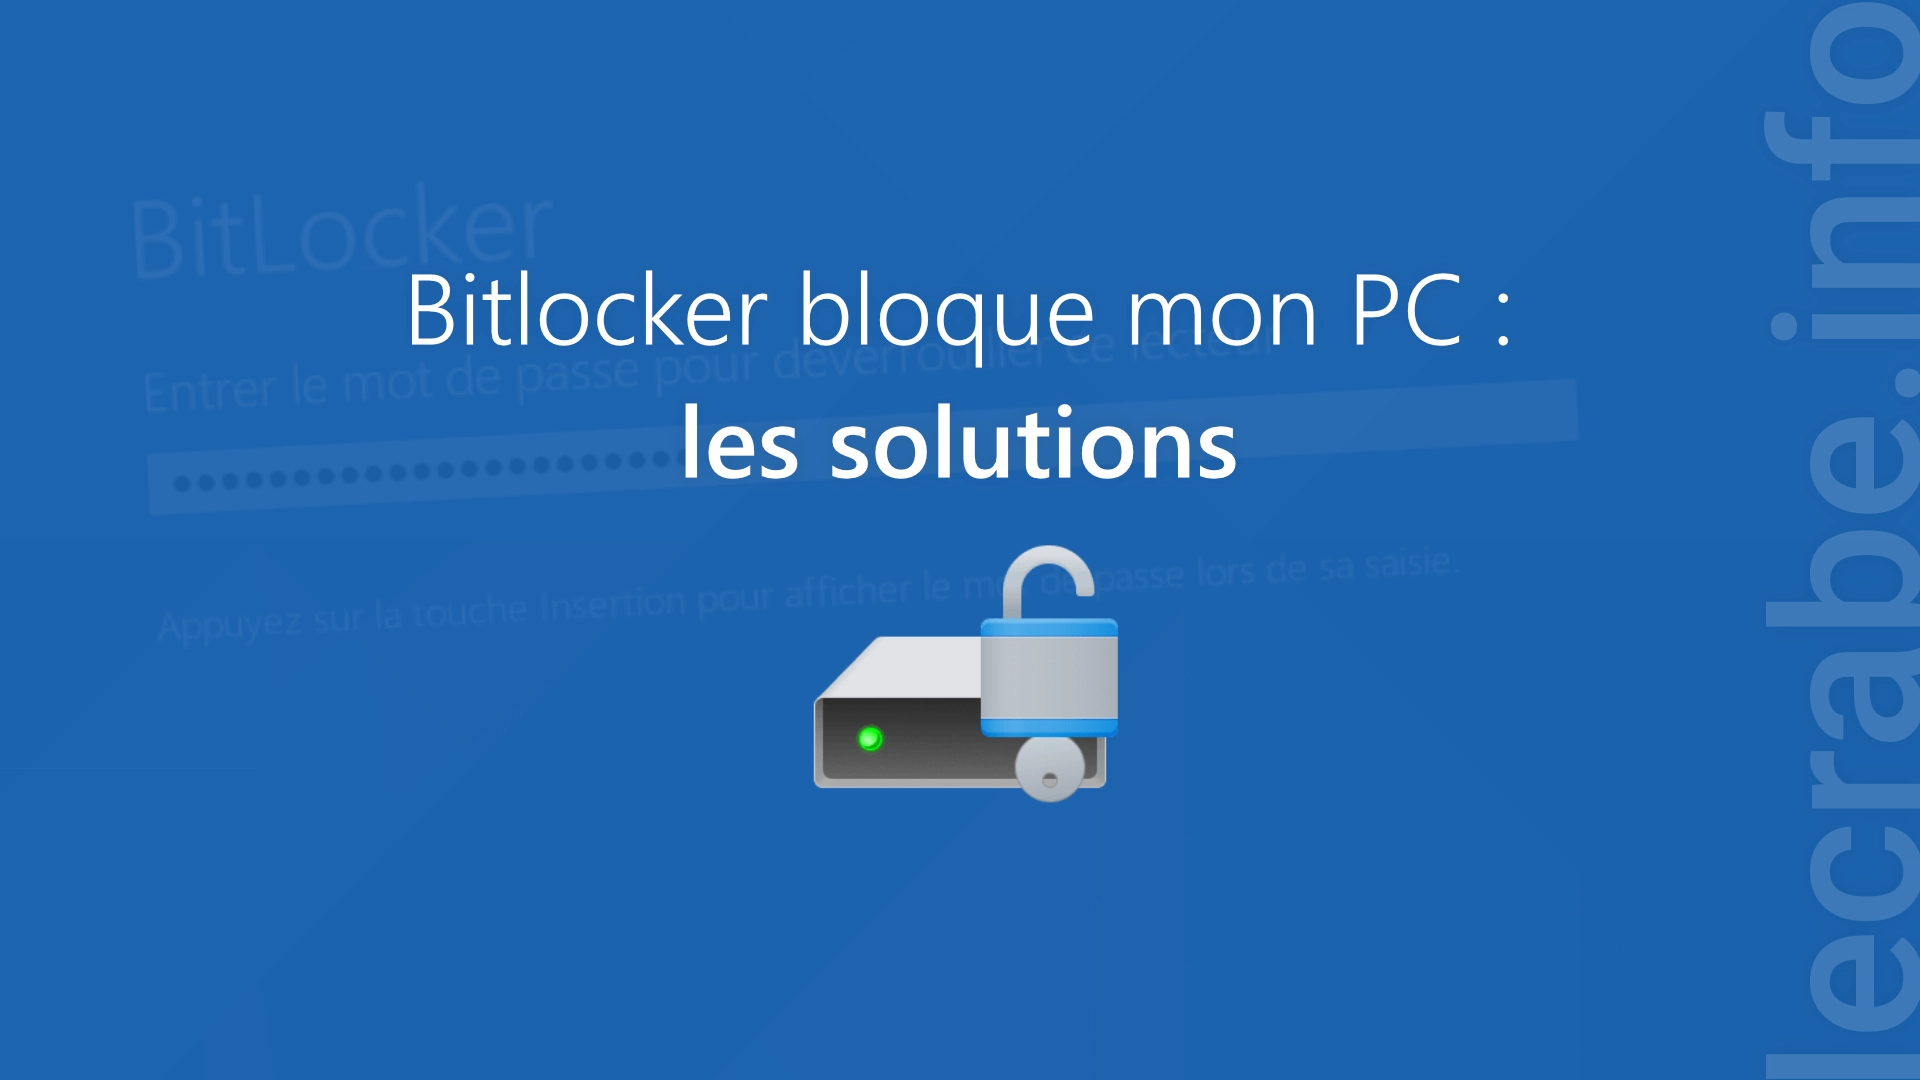 BitLocker bloque mon PC solution